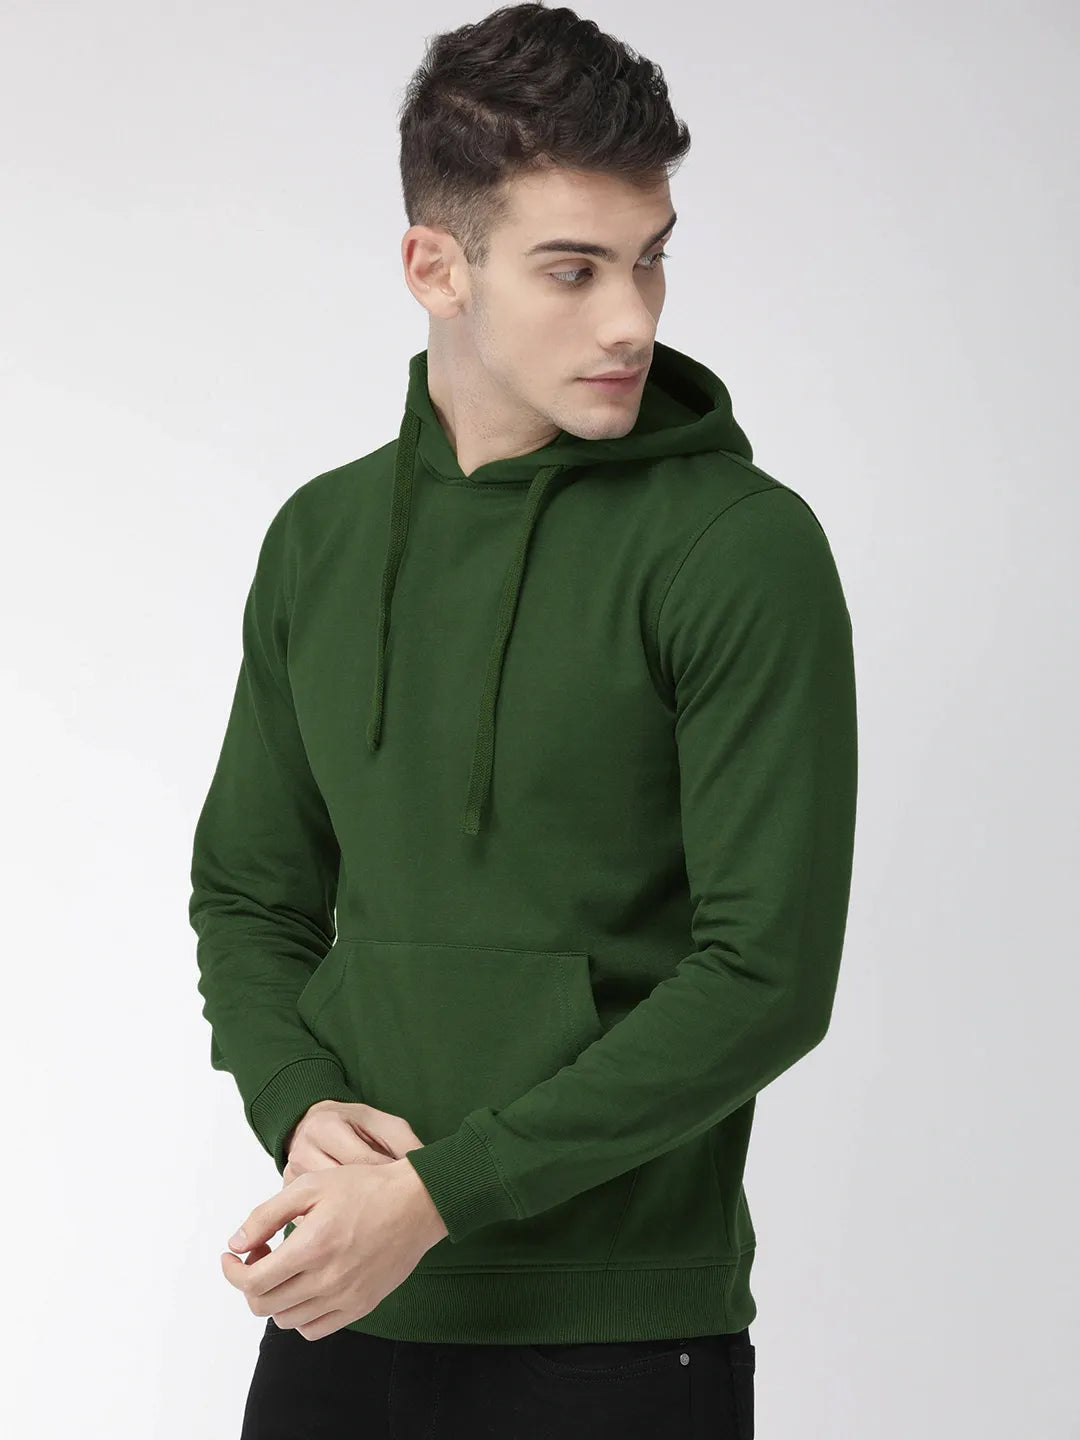 Mhendi Green Color Hoodie For Men and Women (Unisex) Full Sleeves